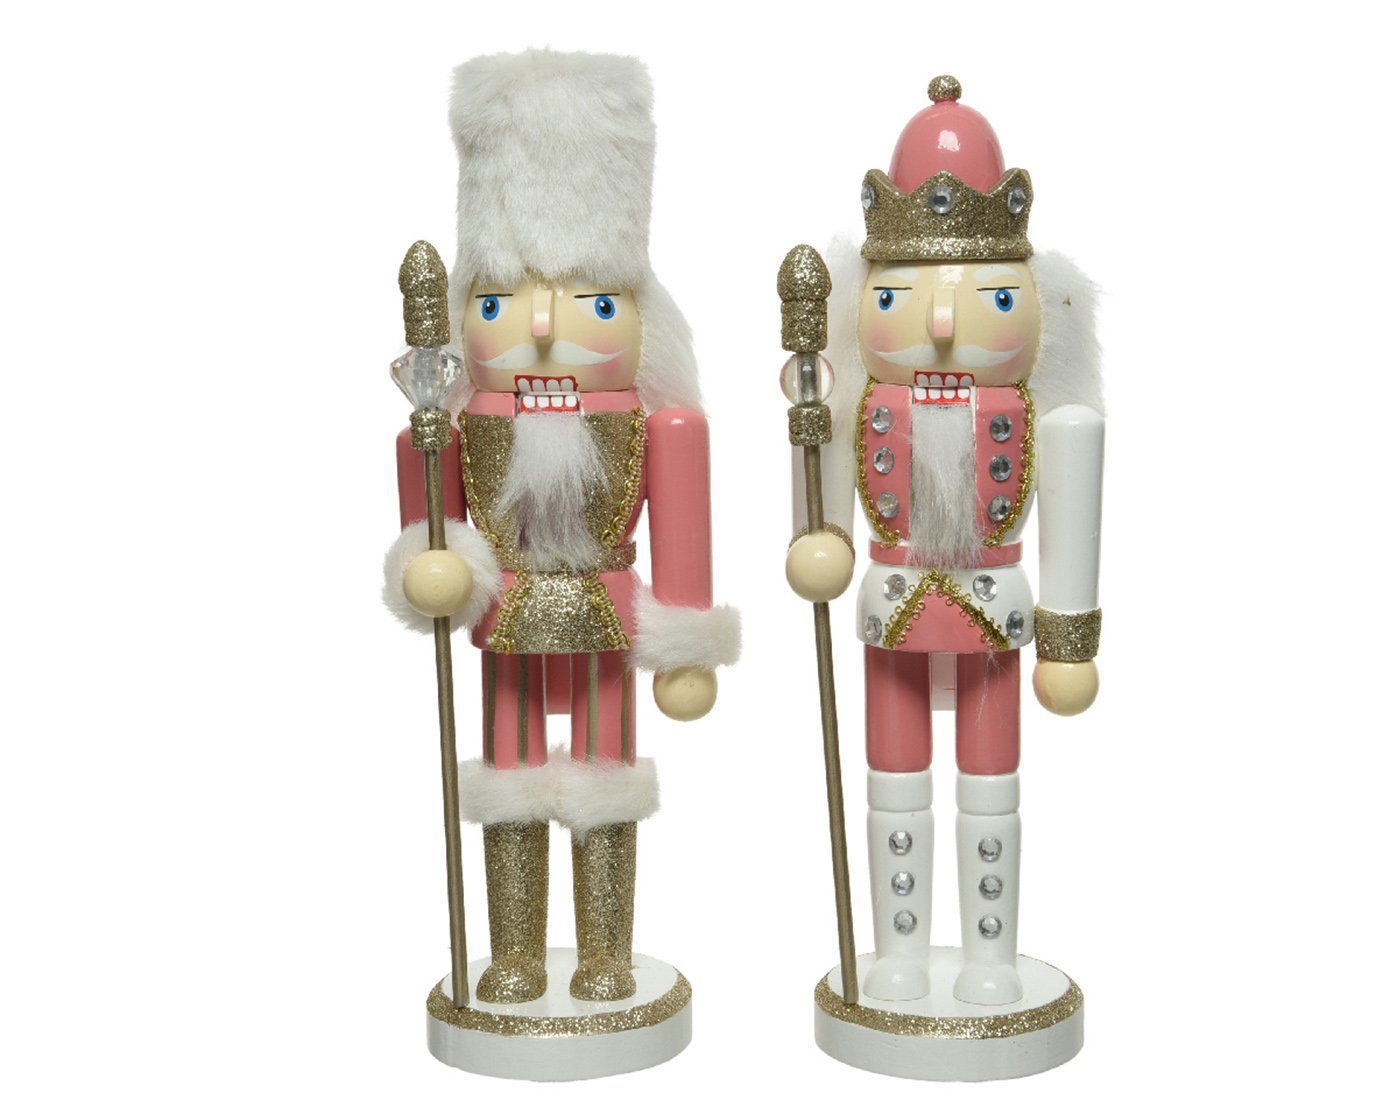 Decoris season decorations Weihnachtsfigur, Nussknacker Figur mit Pelzmütze / Krone Holz 25cm rosa 1 Stück sort. von Decoris season decorations